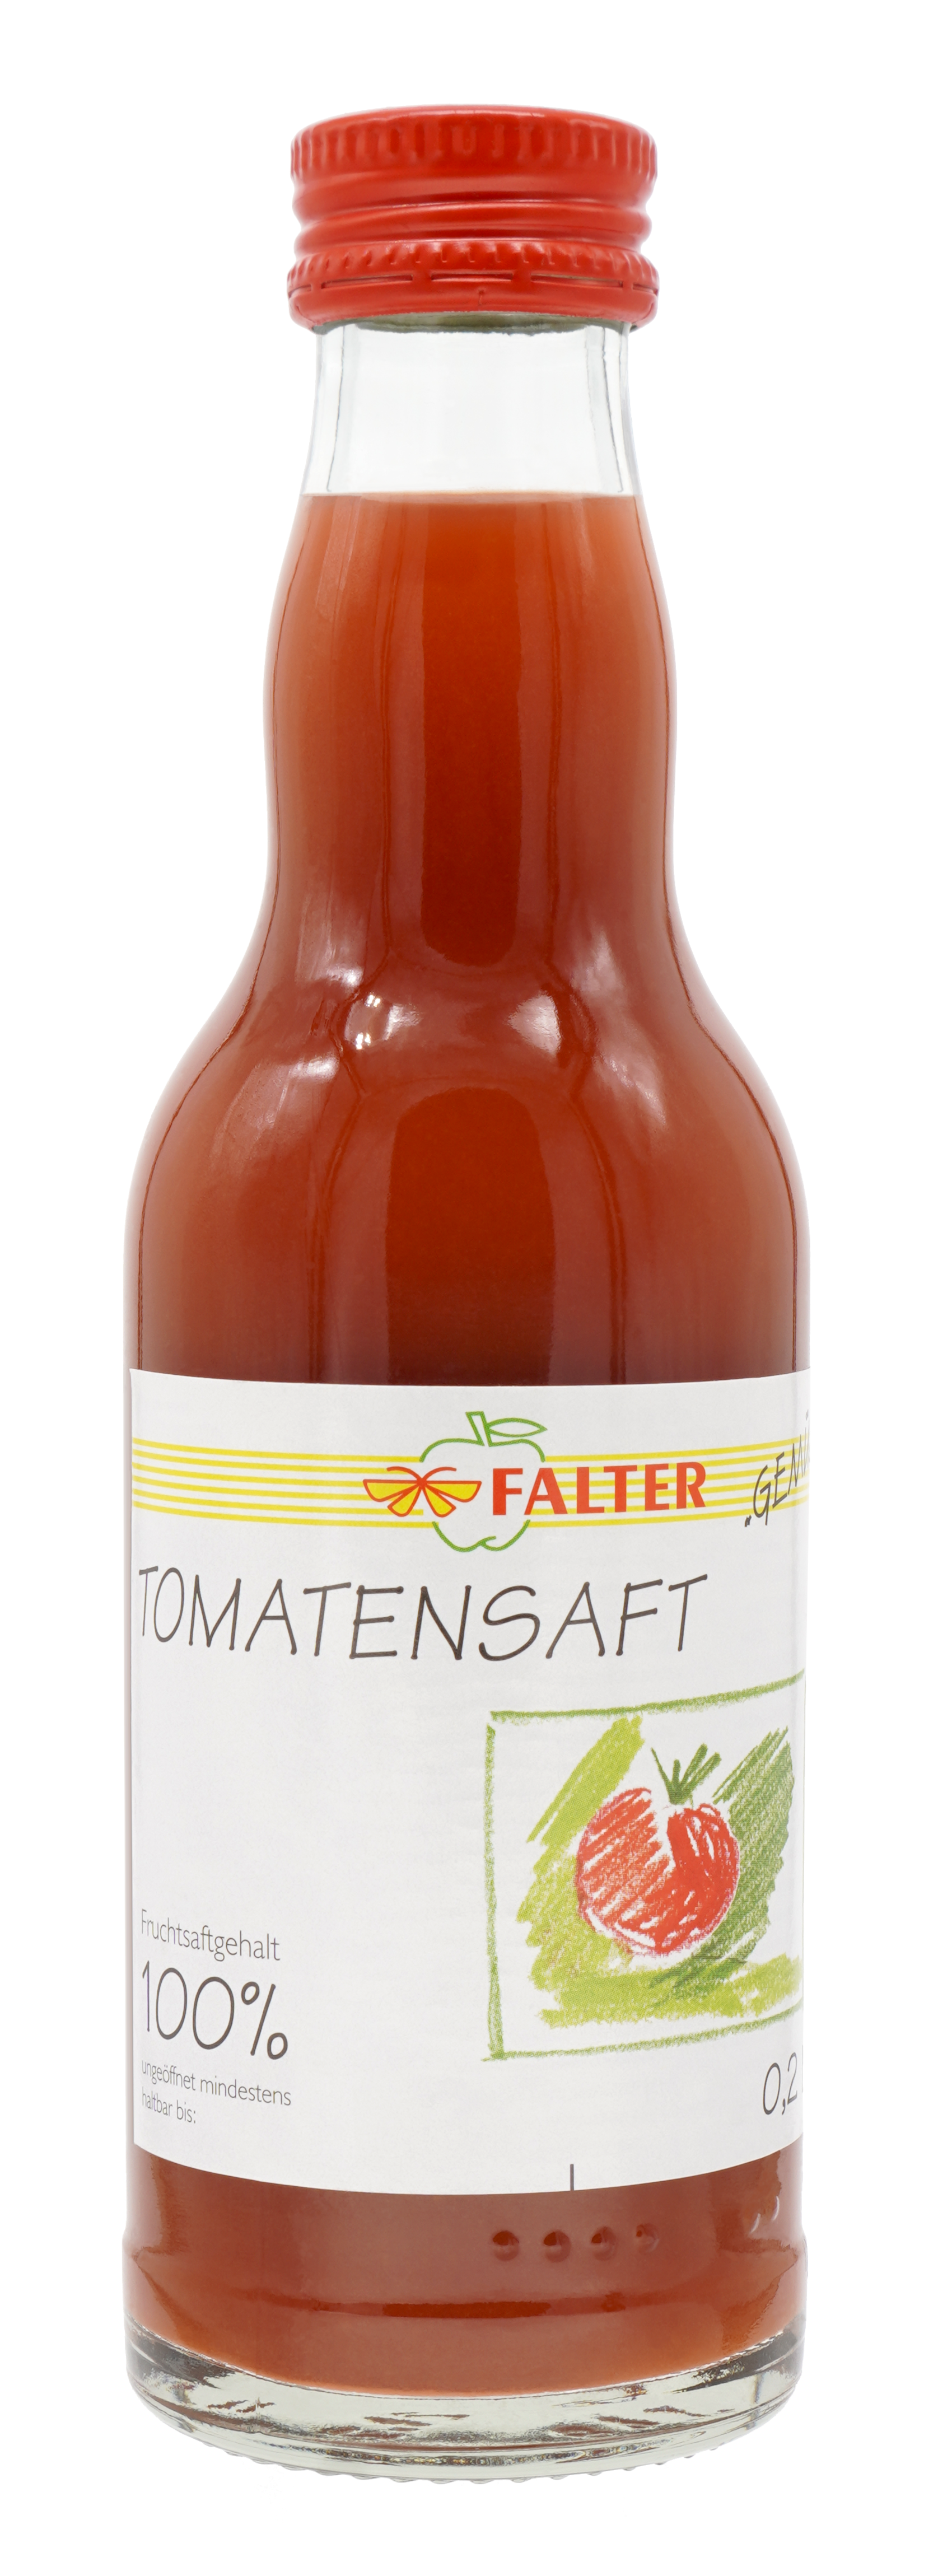 Falter Tomatensaft Mini 12 x 0,2l